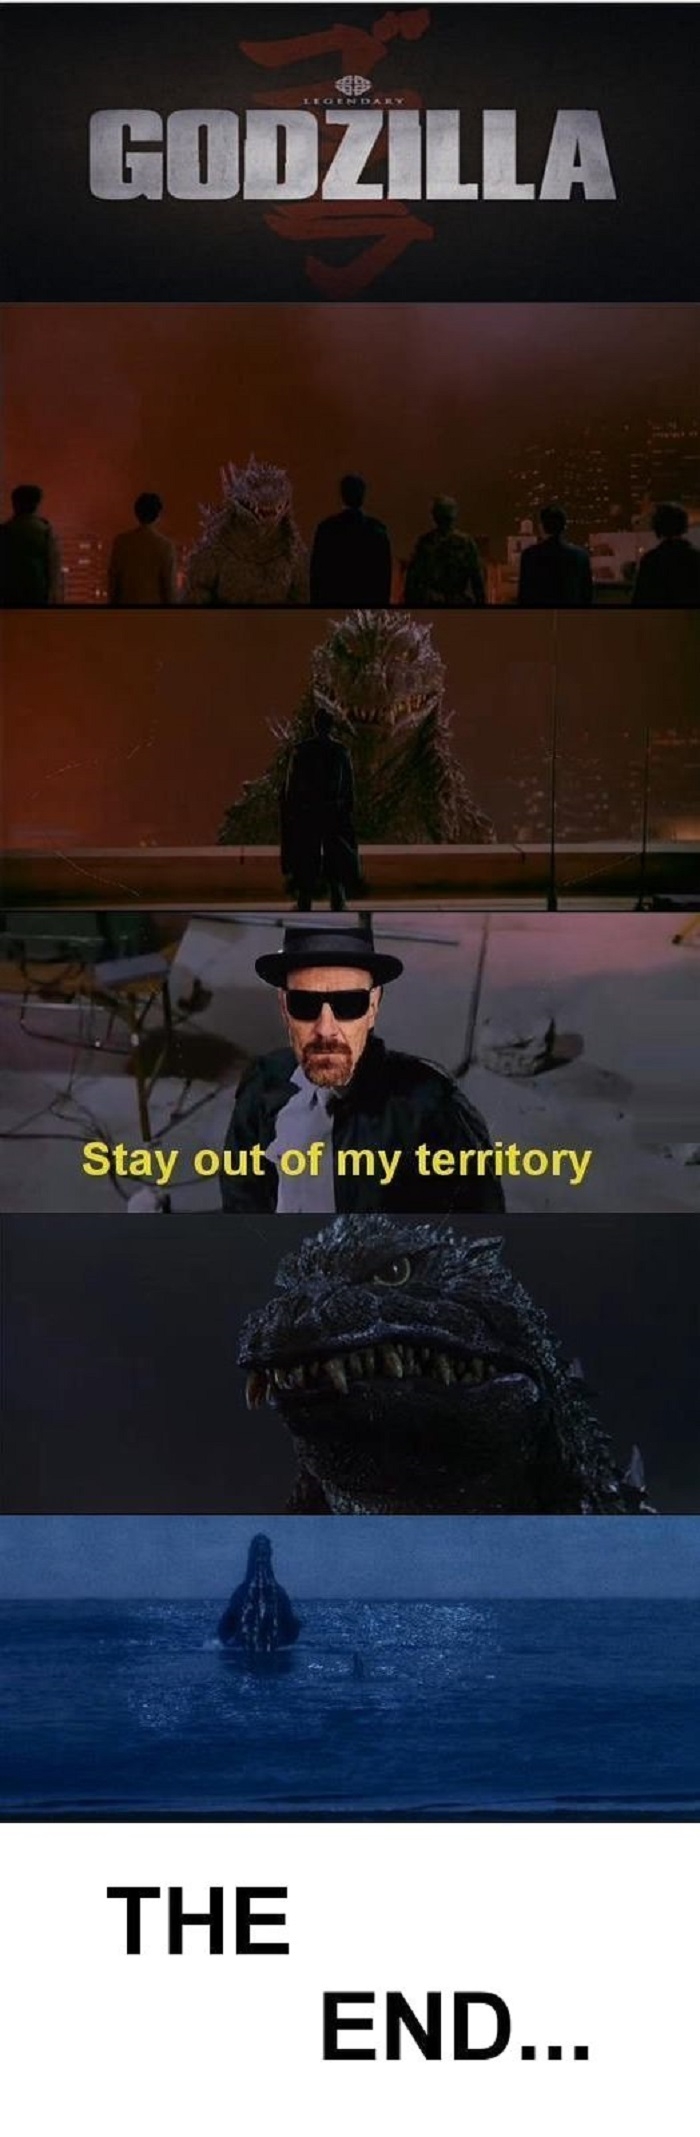 How Godzilla will end